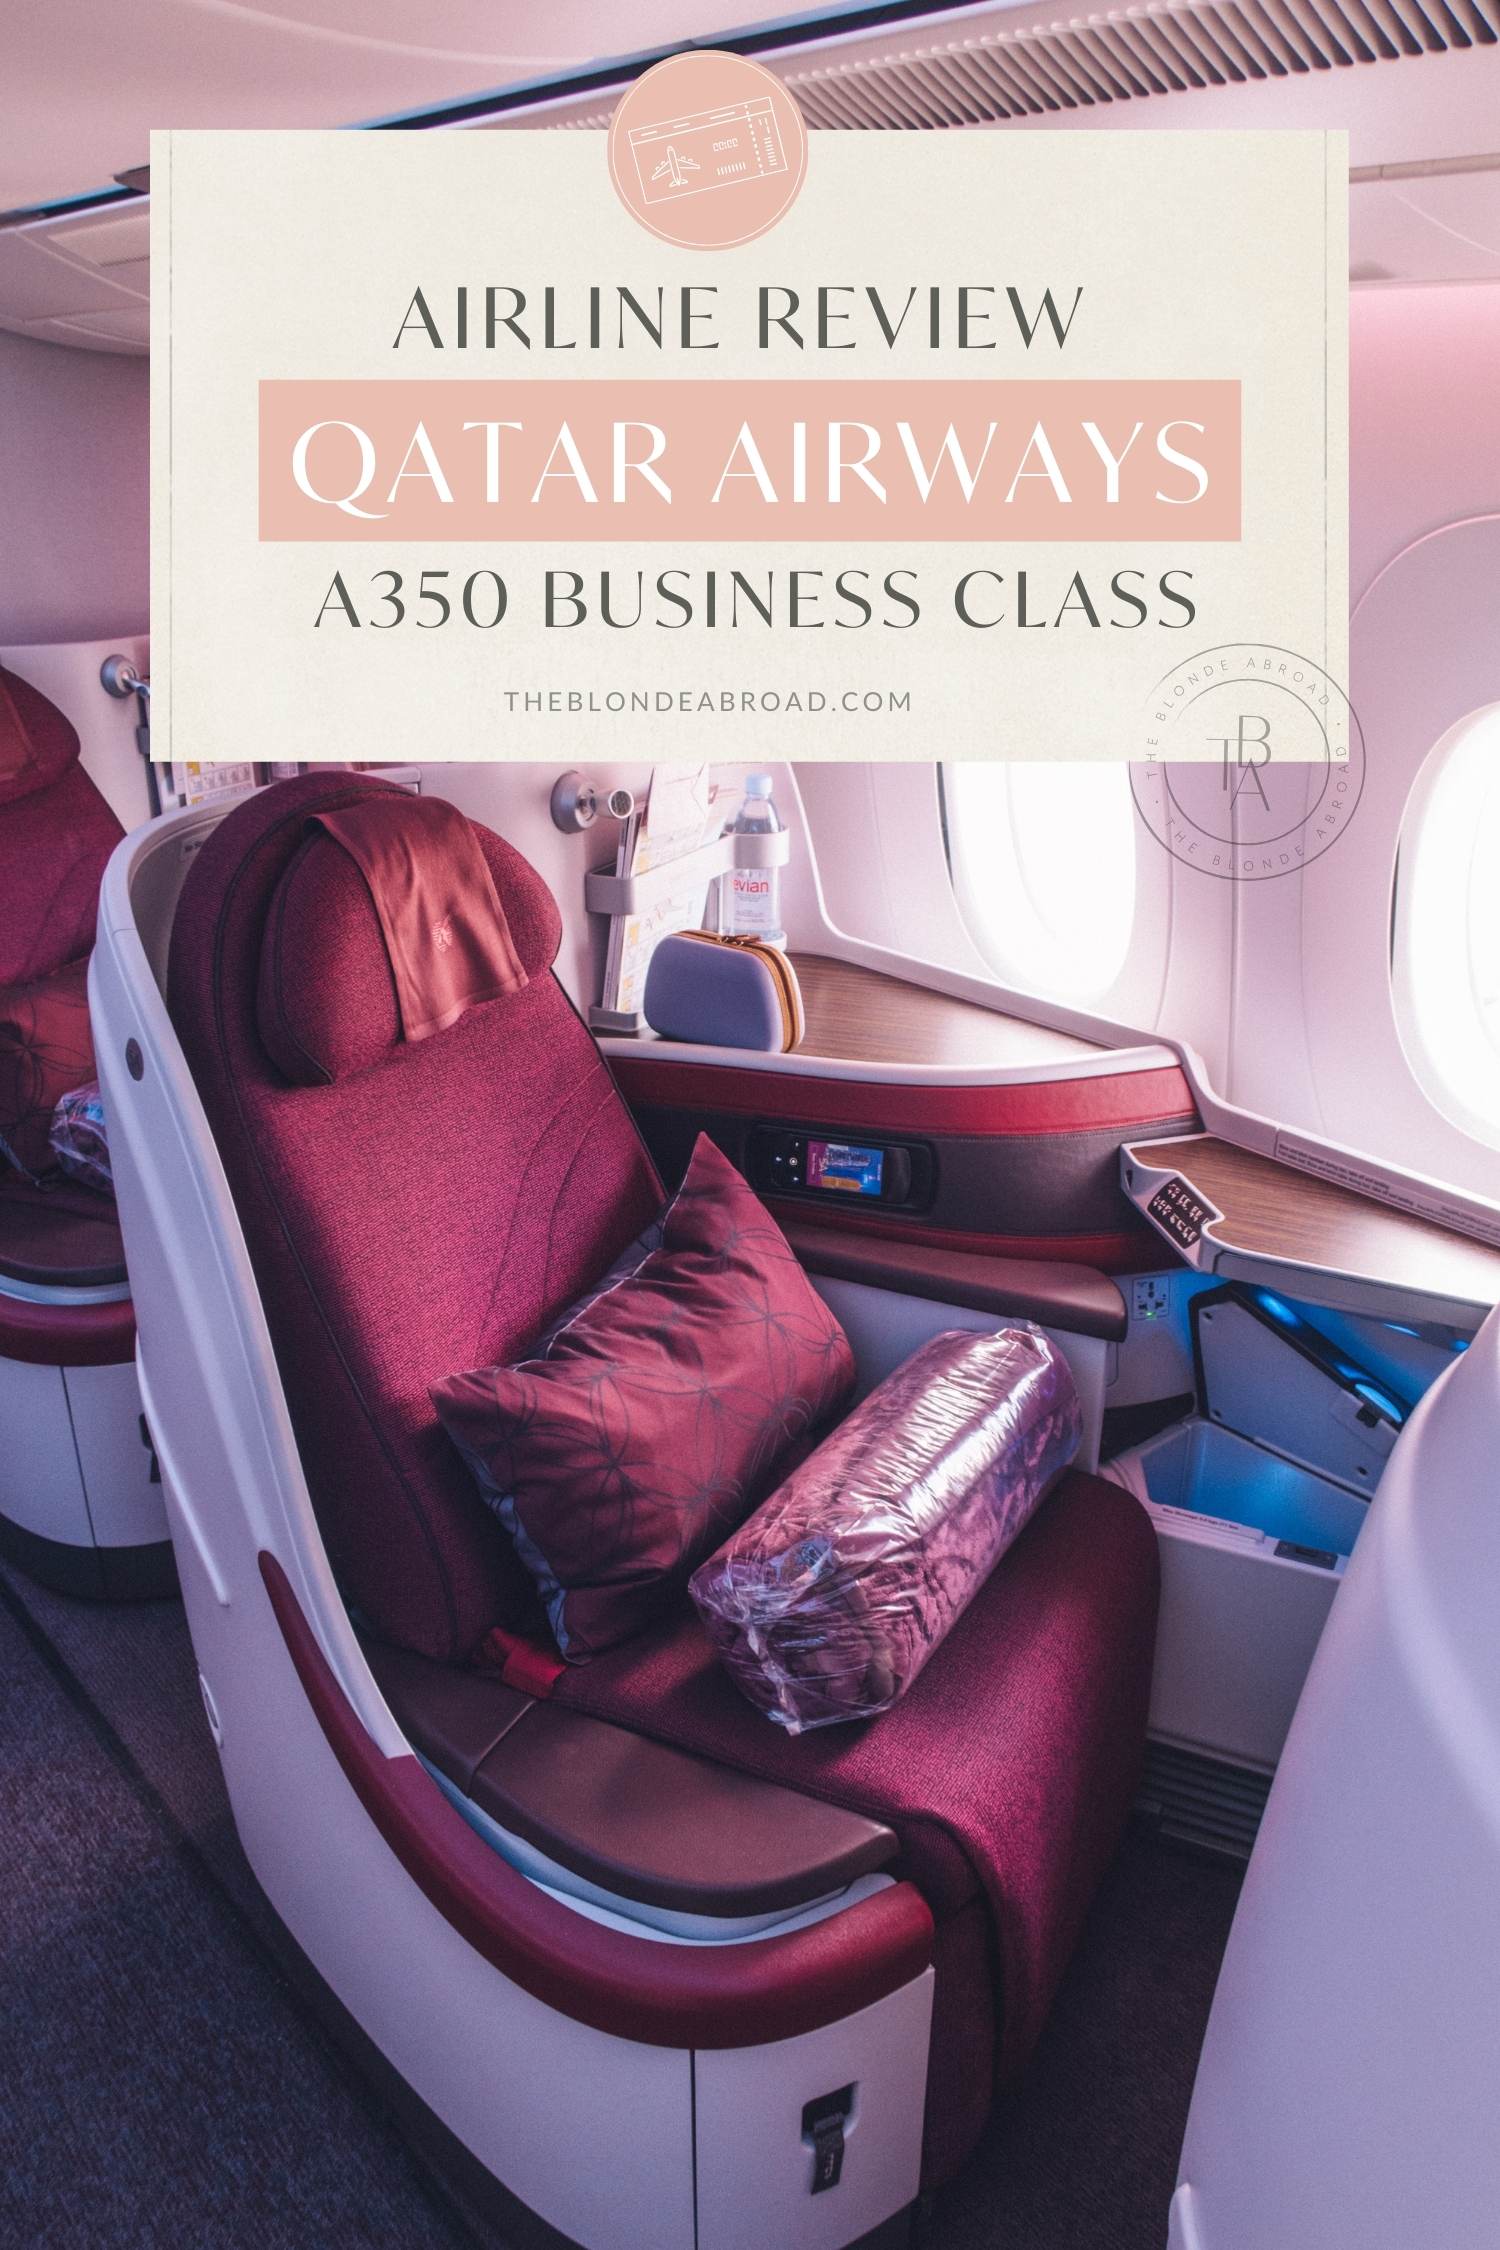 Qatar airways Business Class review